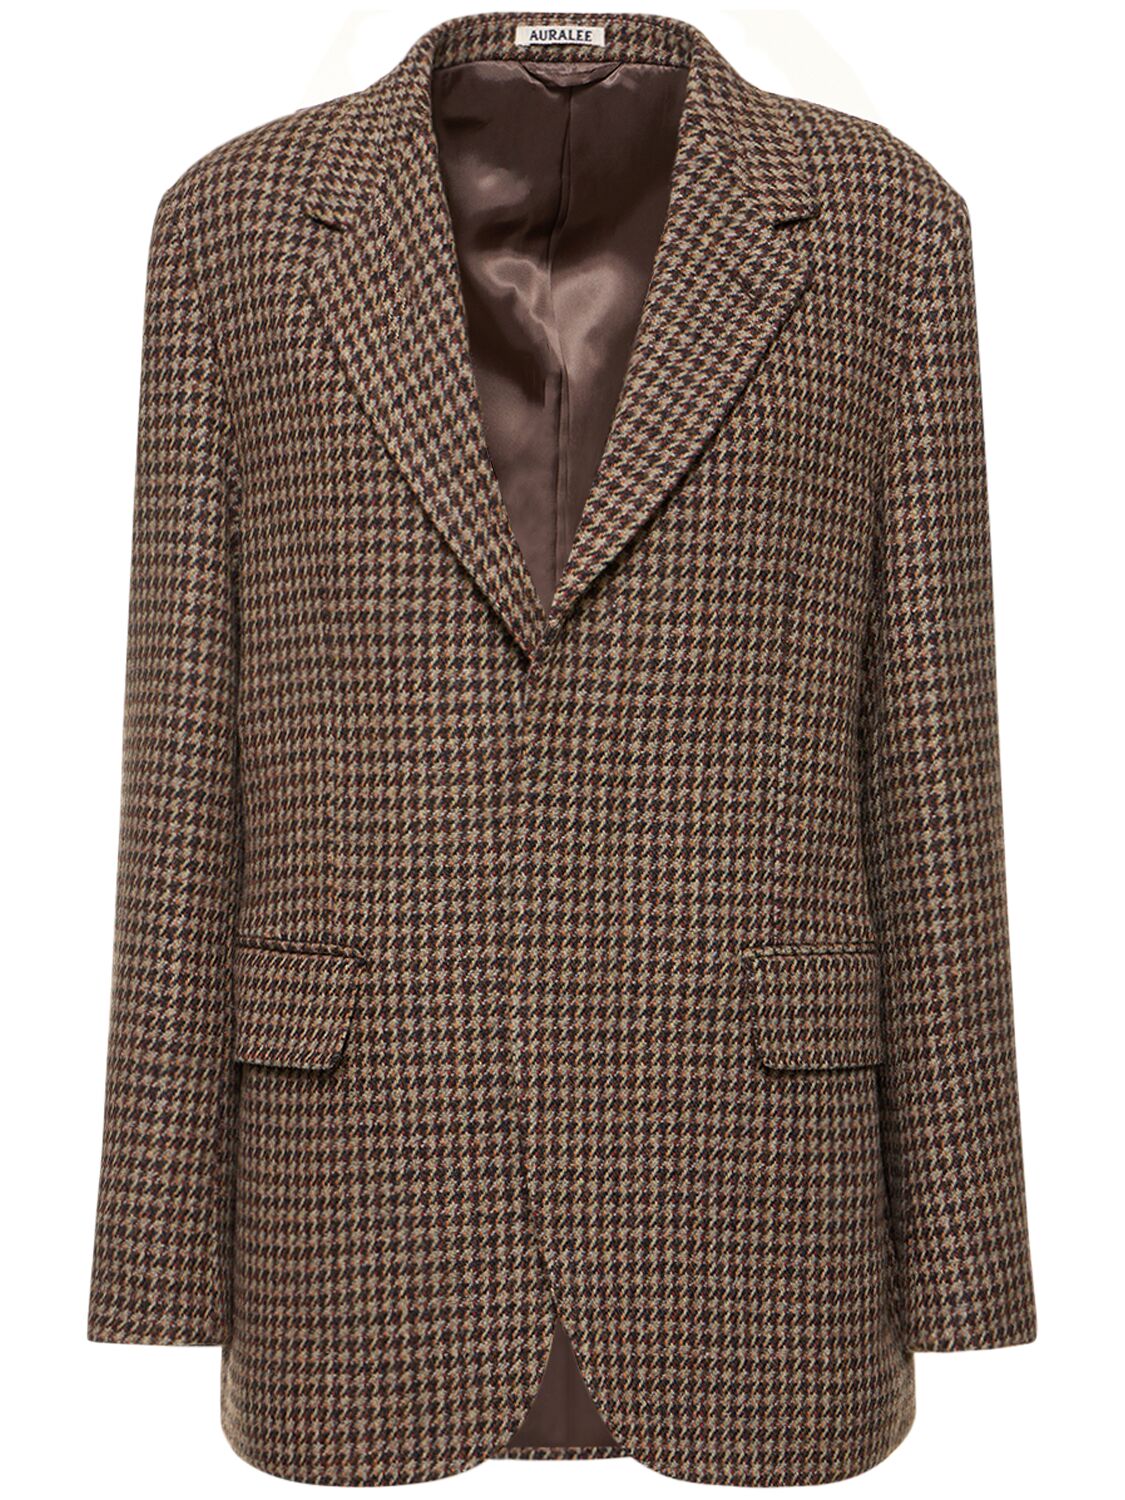 Image of British Wool Tweed Jacket